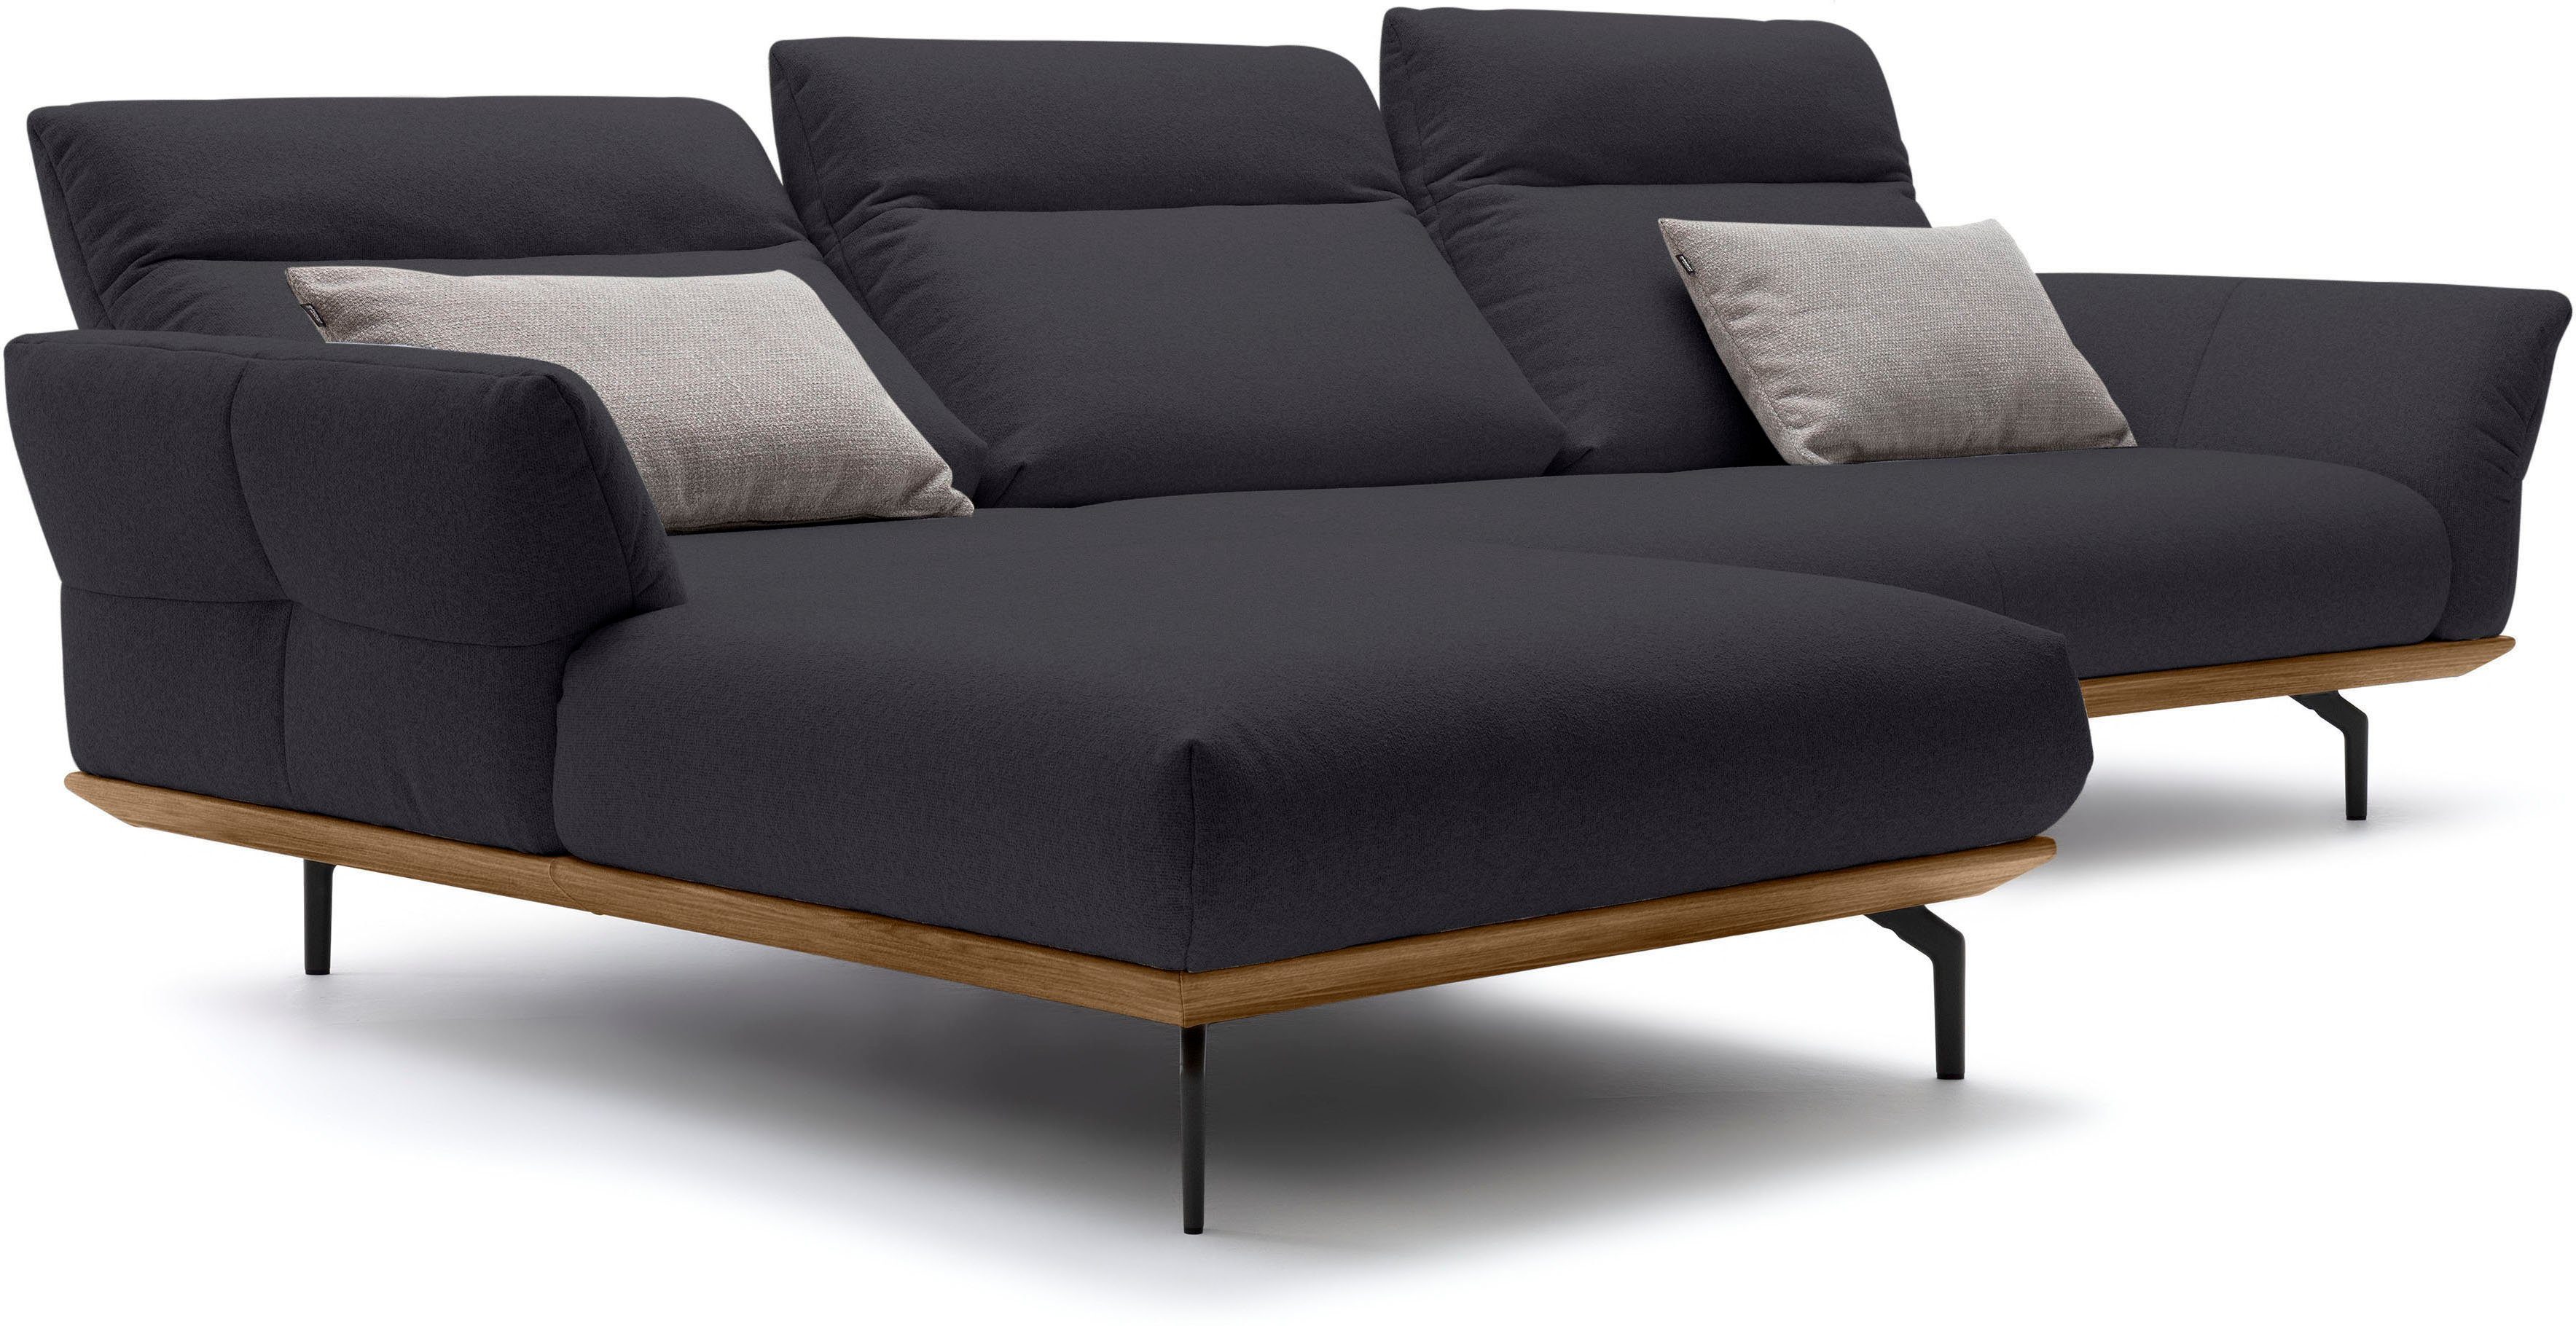 cm Ecksofa sofa in hs.460, hülsta Umbragrau, Sockel in 318 Winkelfüße Breite Nussbaum,